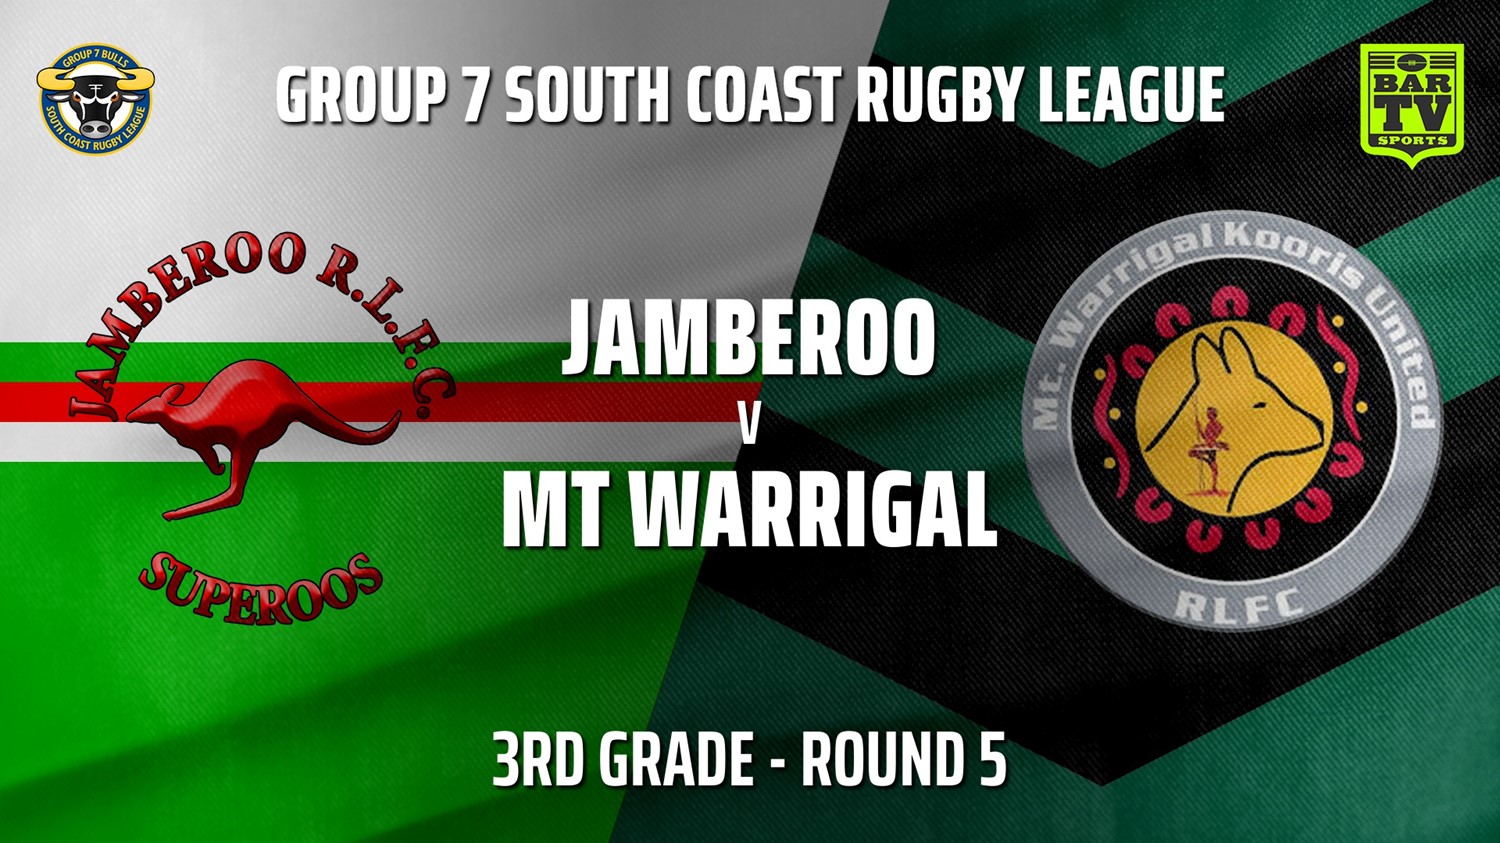 210515-Group 7 RL Round 5 - 3rd Grade - Jamberoo v Mt Warrigal Kooris Slate Image